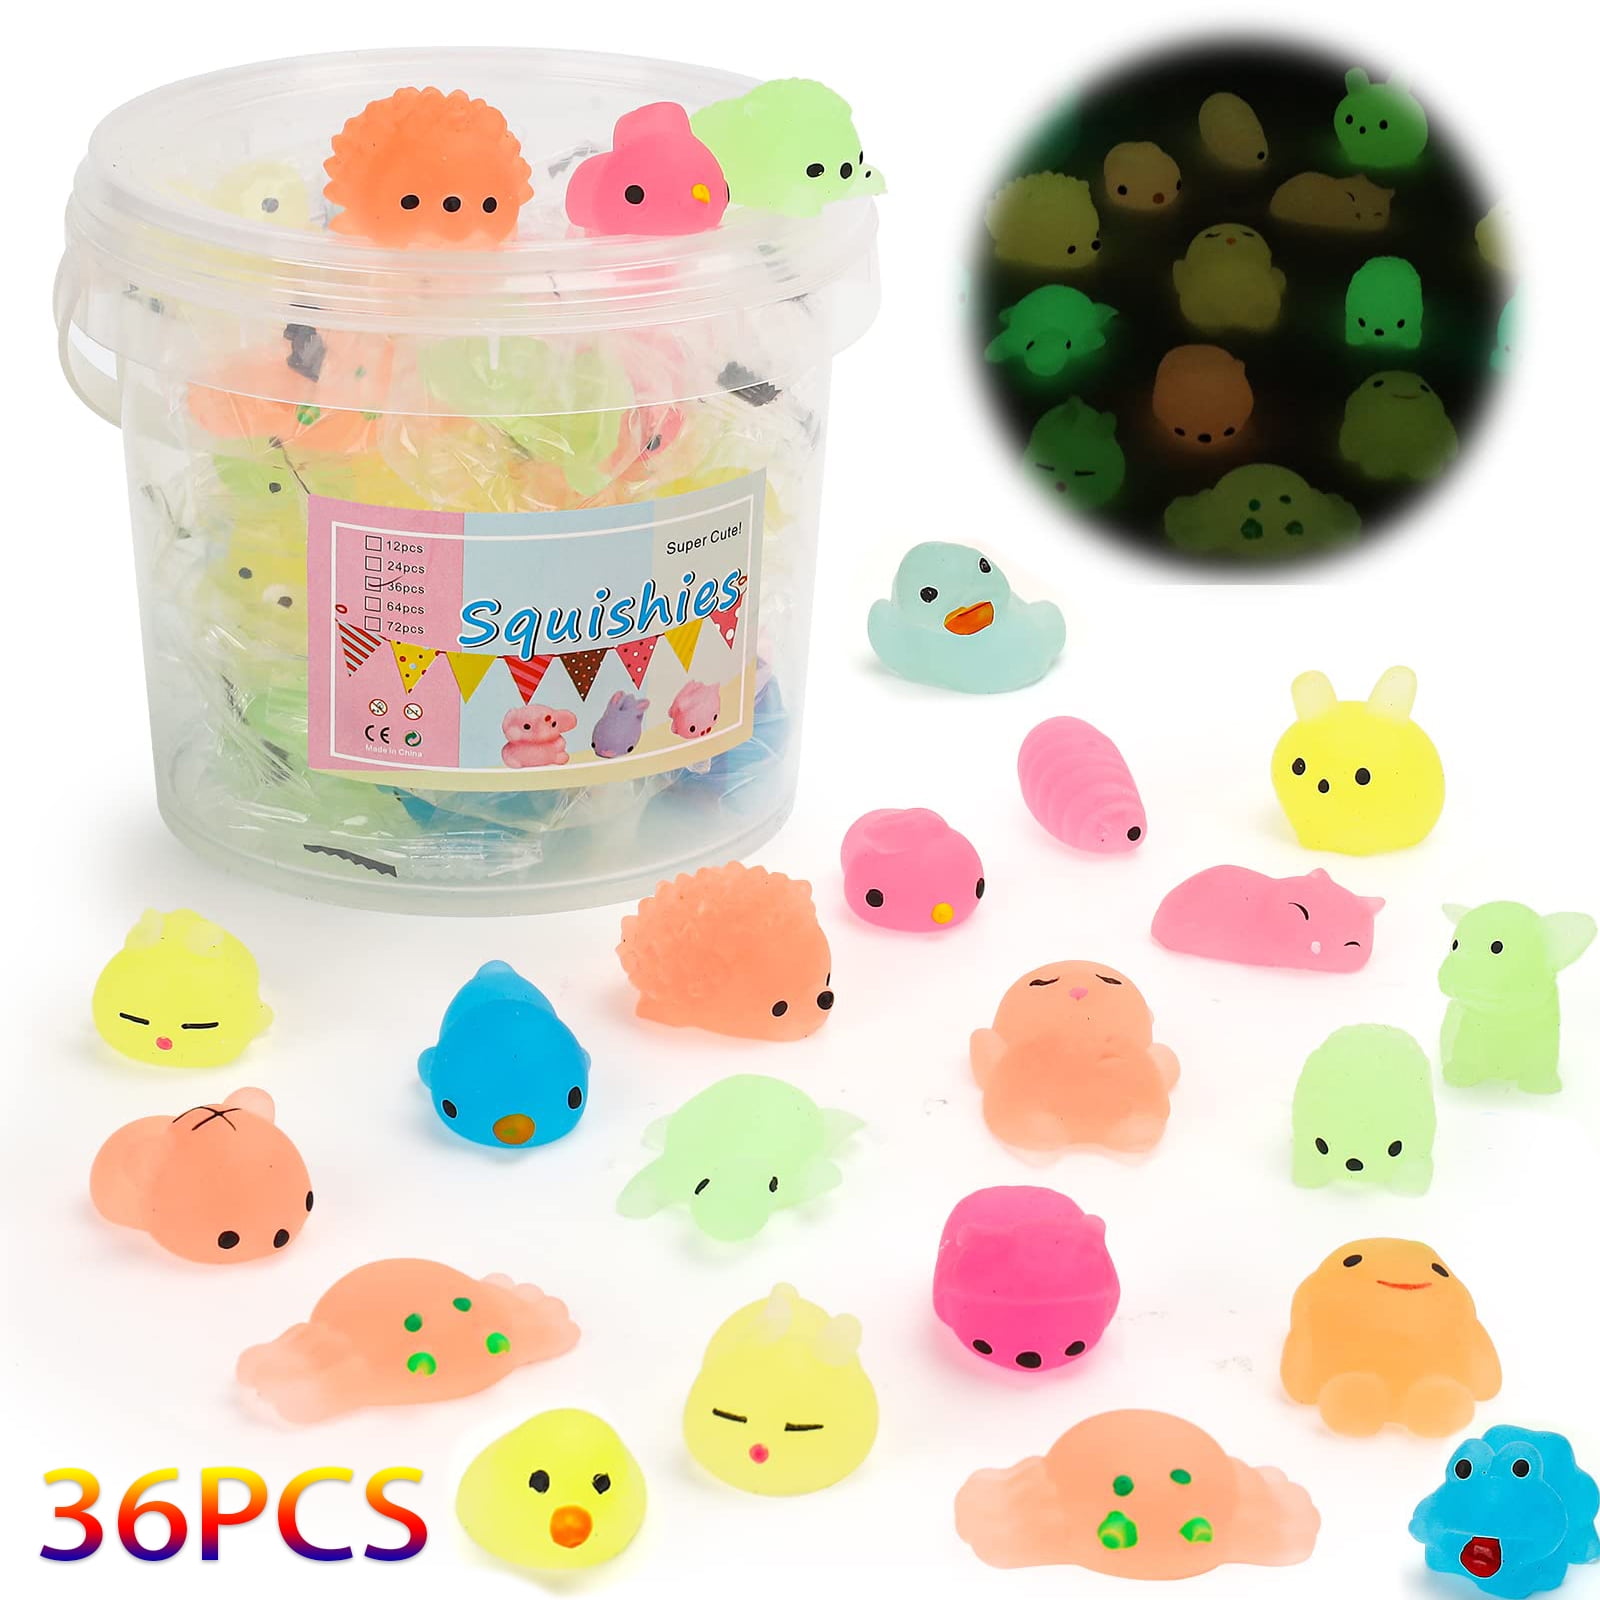 sqlhrke mochi squishy toys animals kawaii mini squishies 100 pack, fidget  toys bulk for adhd kids adults stress relief,sensory toys b